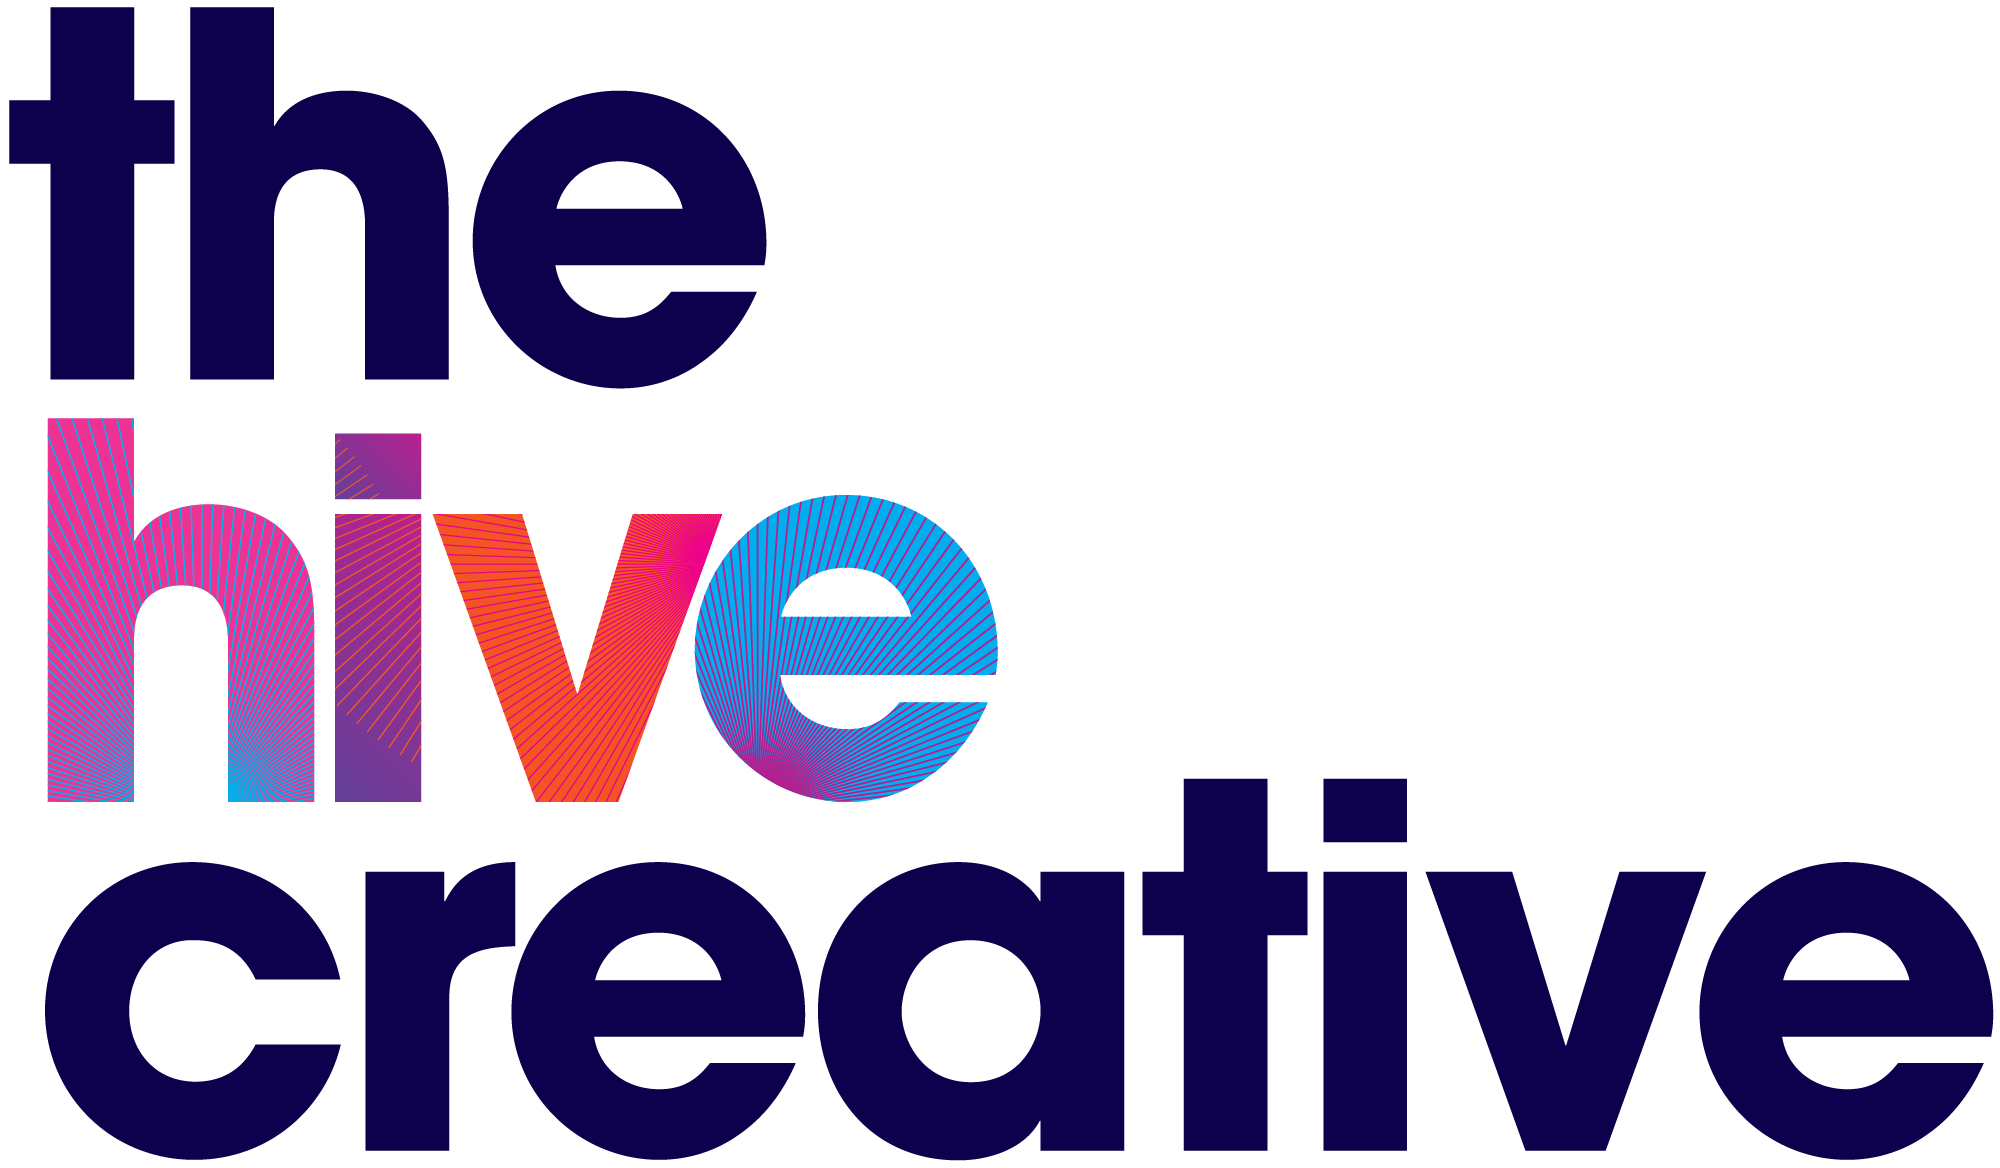 The Hive Creative